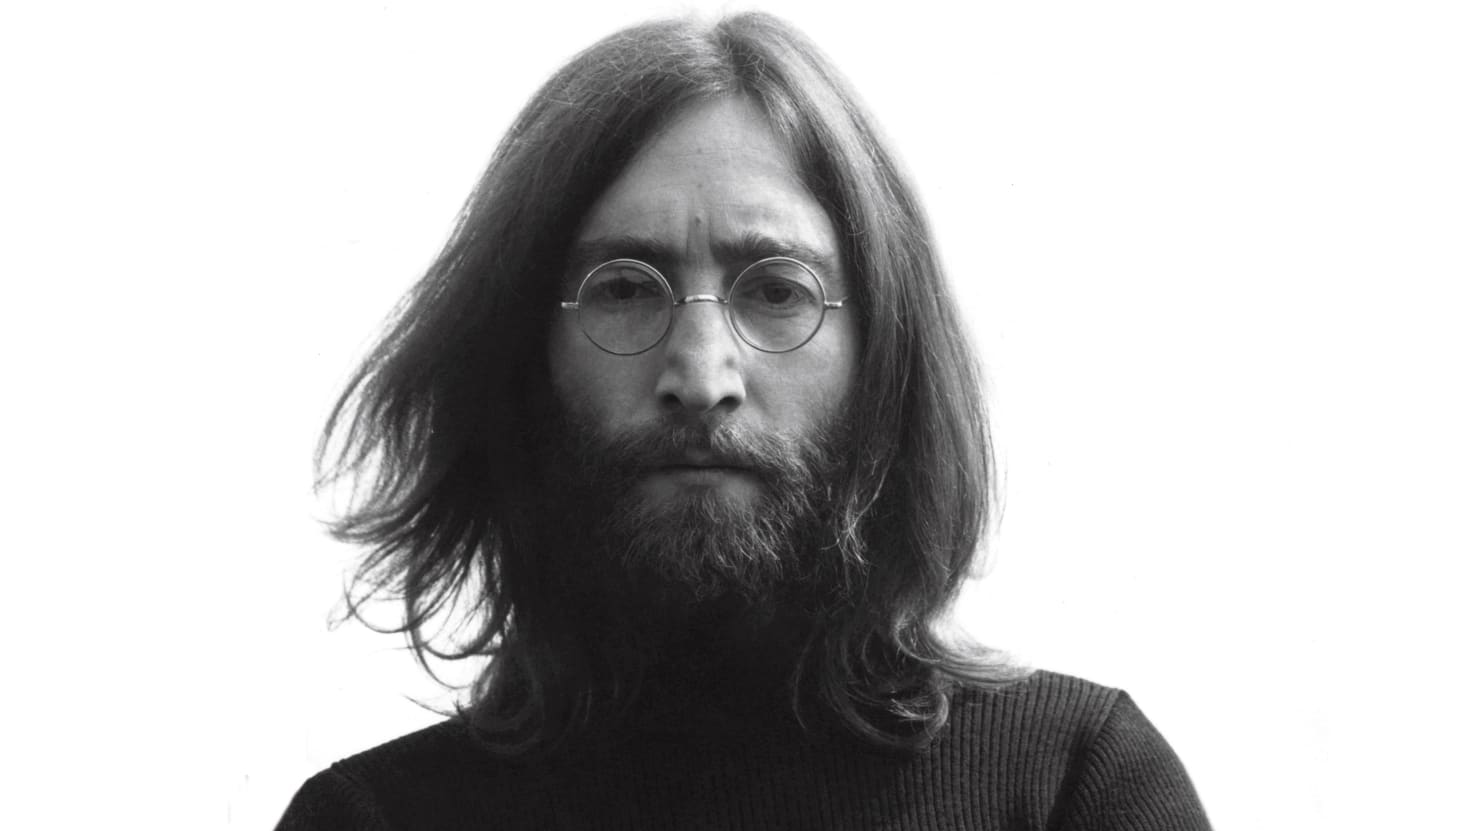 Yoko Ono, Julian Lennon and More Remember John Lennon on His 80th Birthday